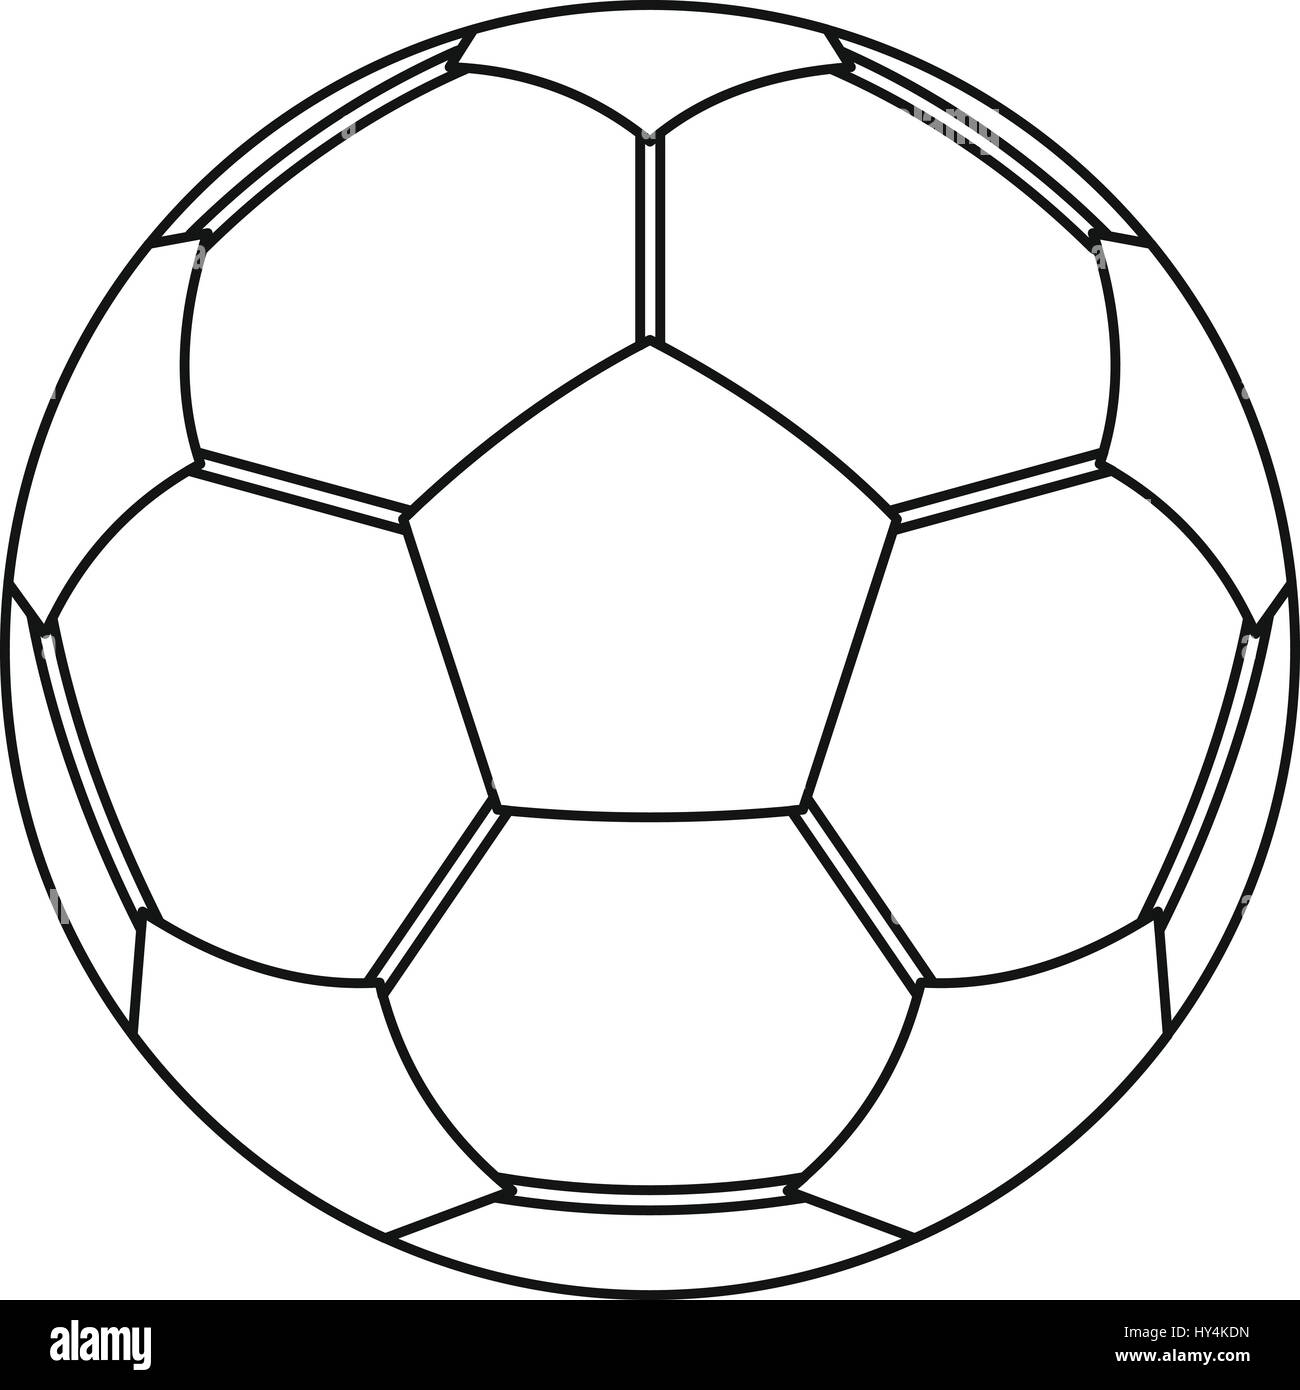 Football ball icon, outline style Stock Vector